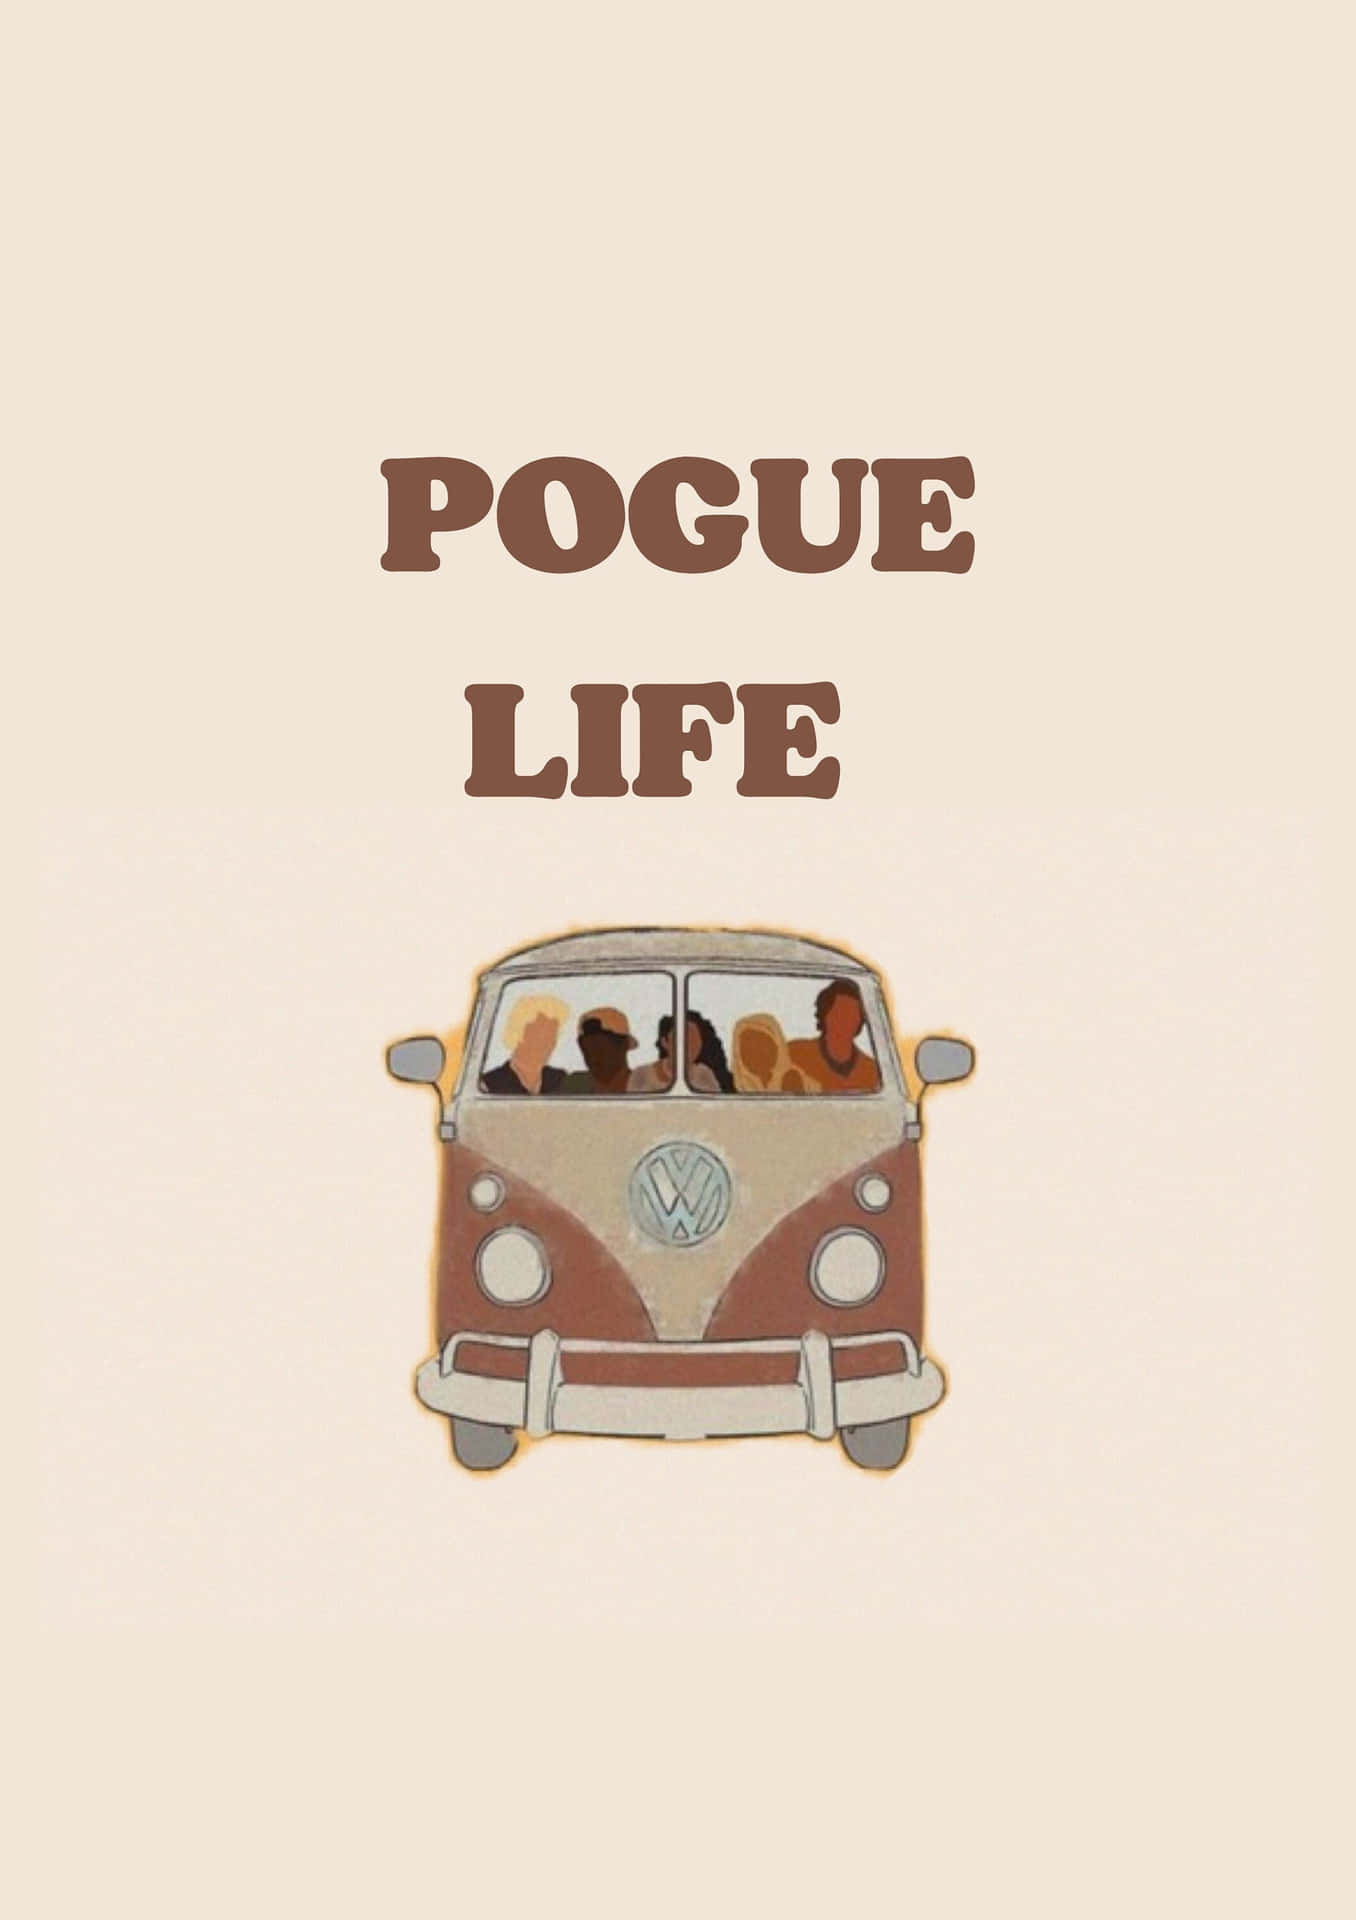 Pogue Life V W Bus Illustration Wallpaper